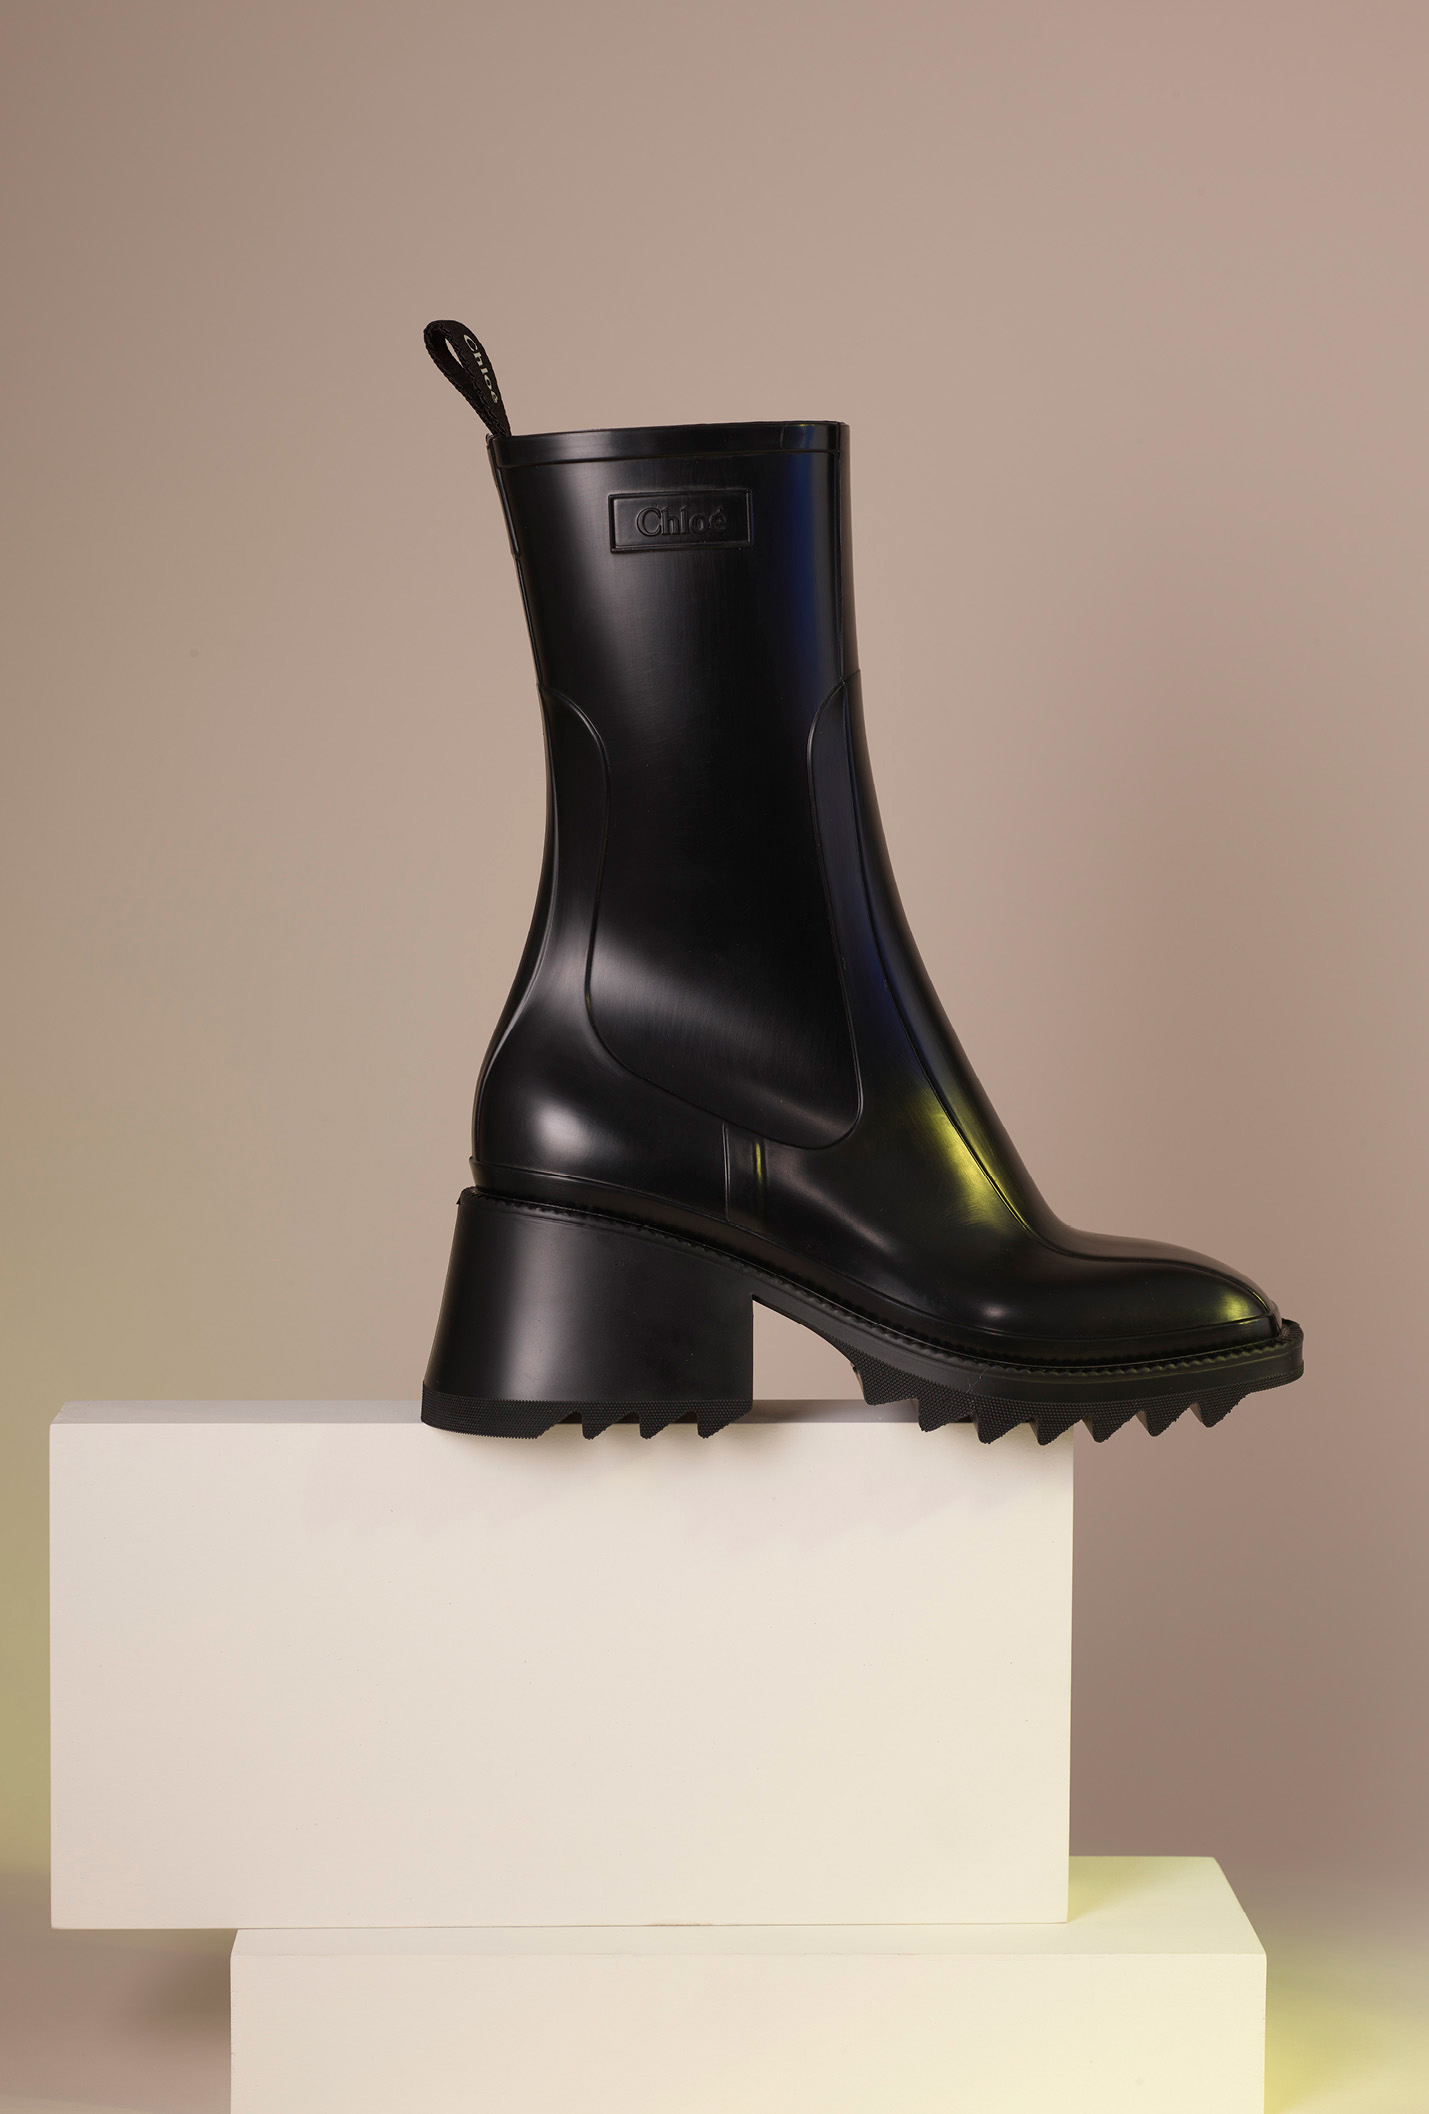 chloe boots 2019